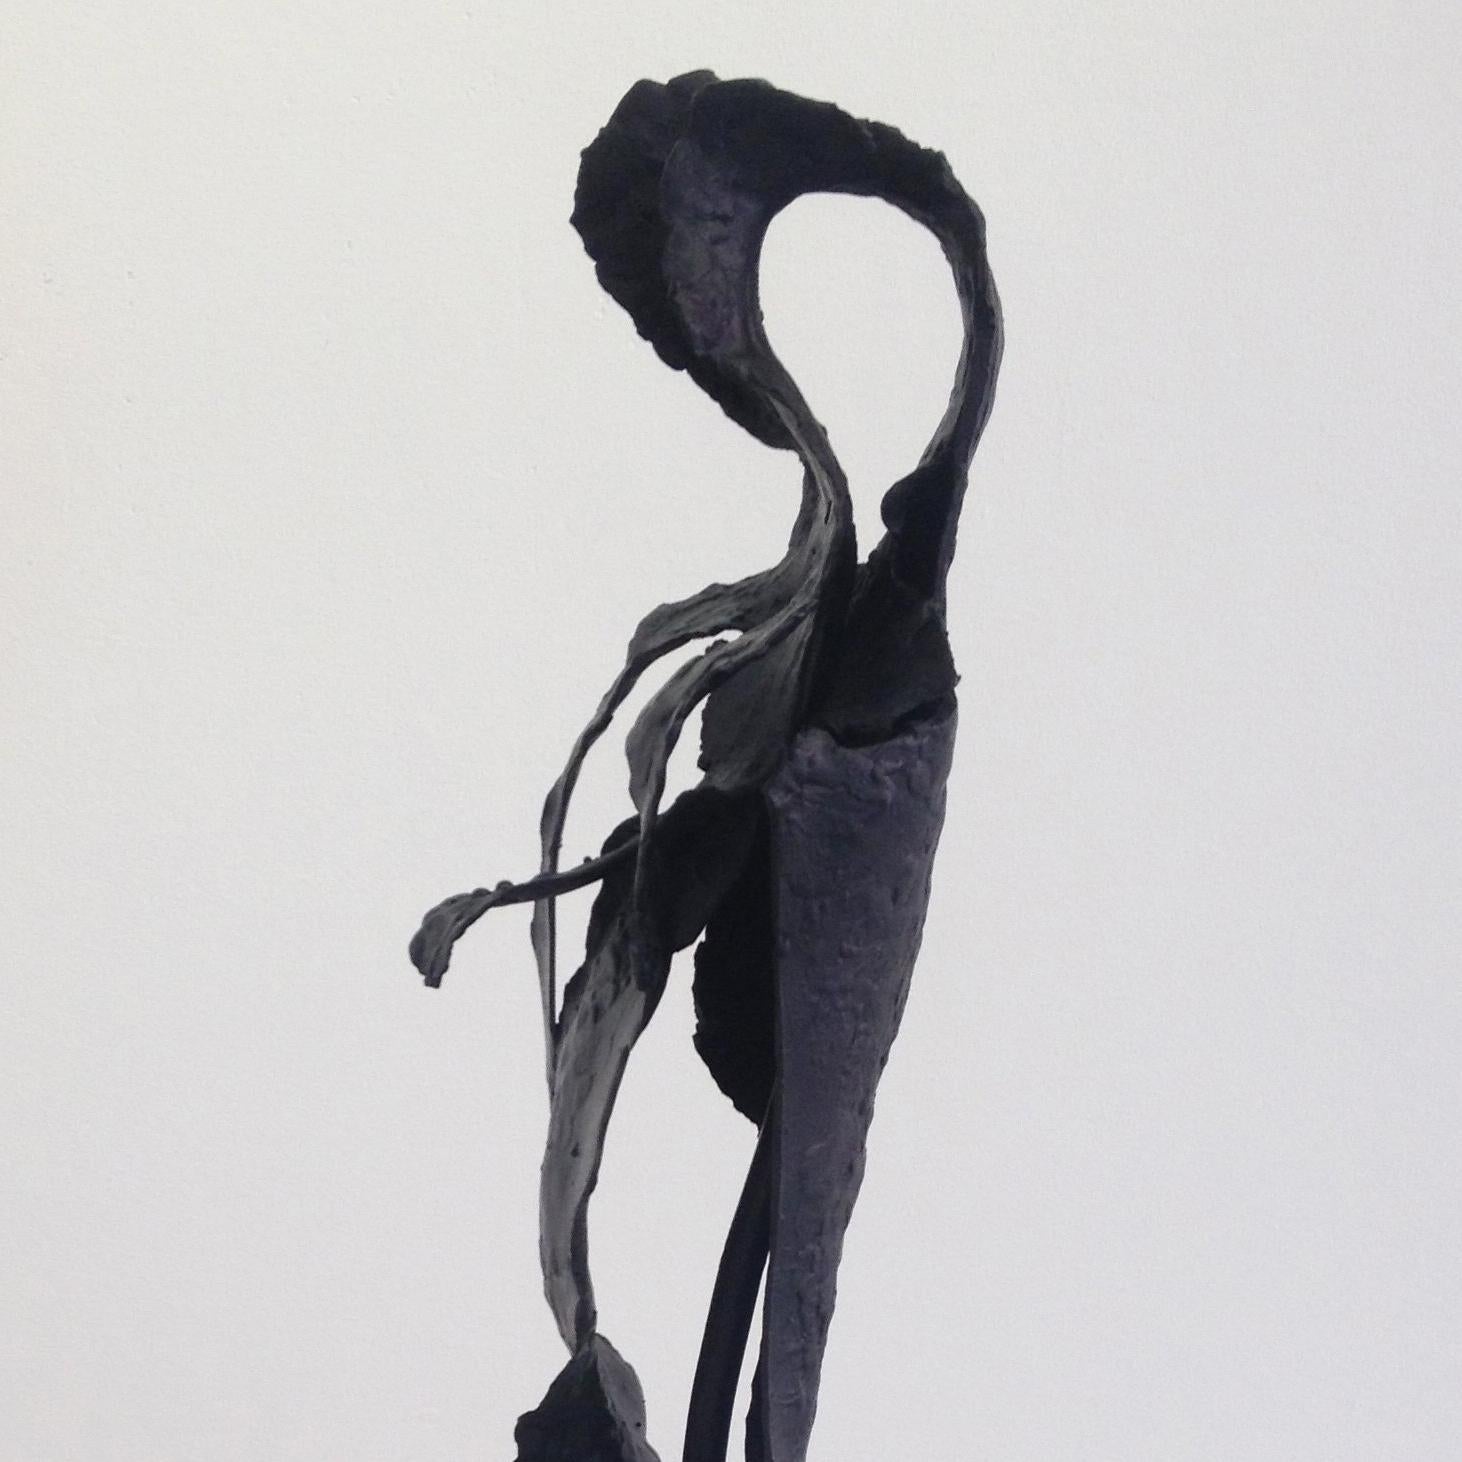 Untitled (#16) - Sculpture by Fritz Bultman